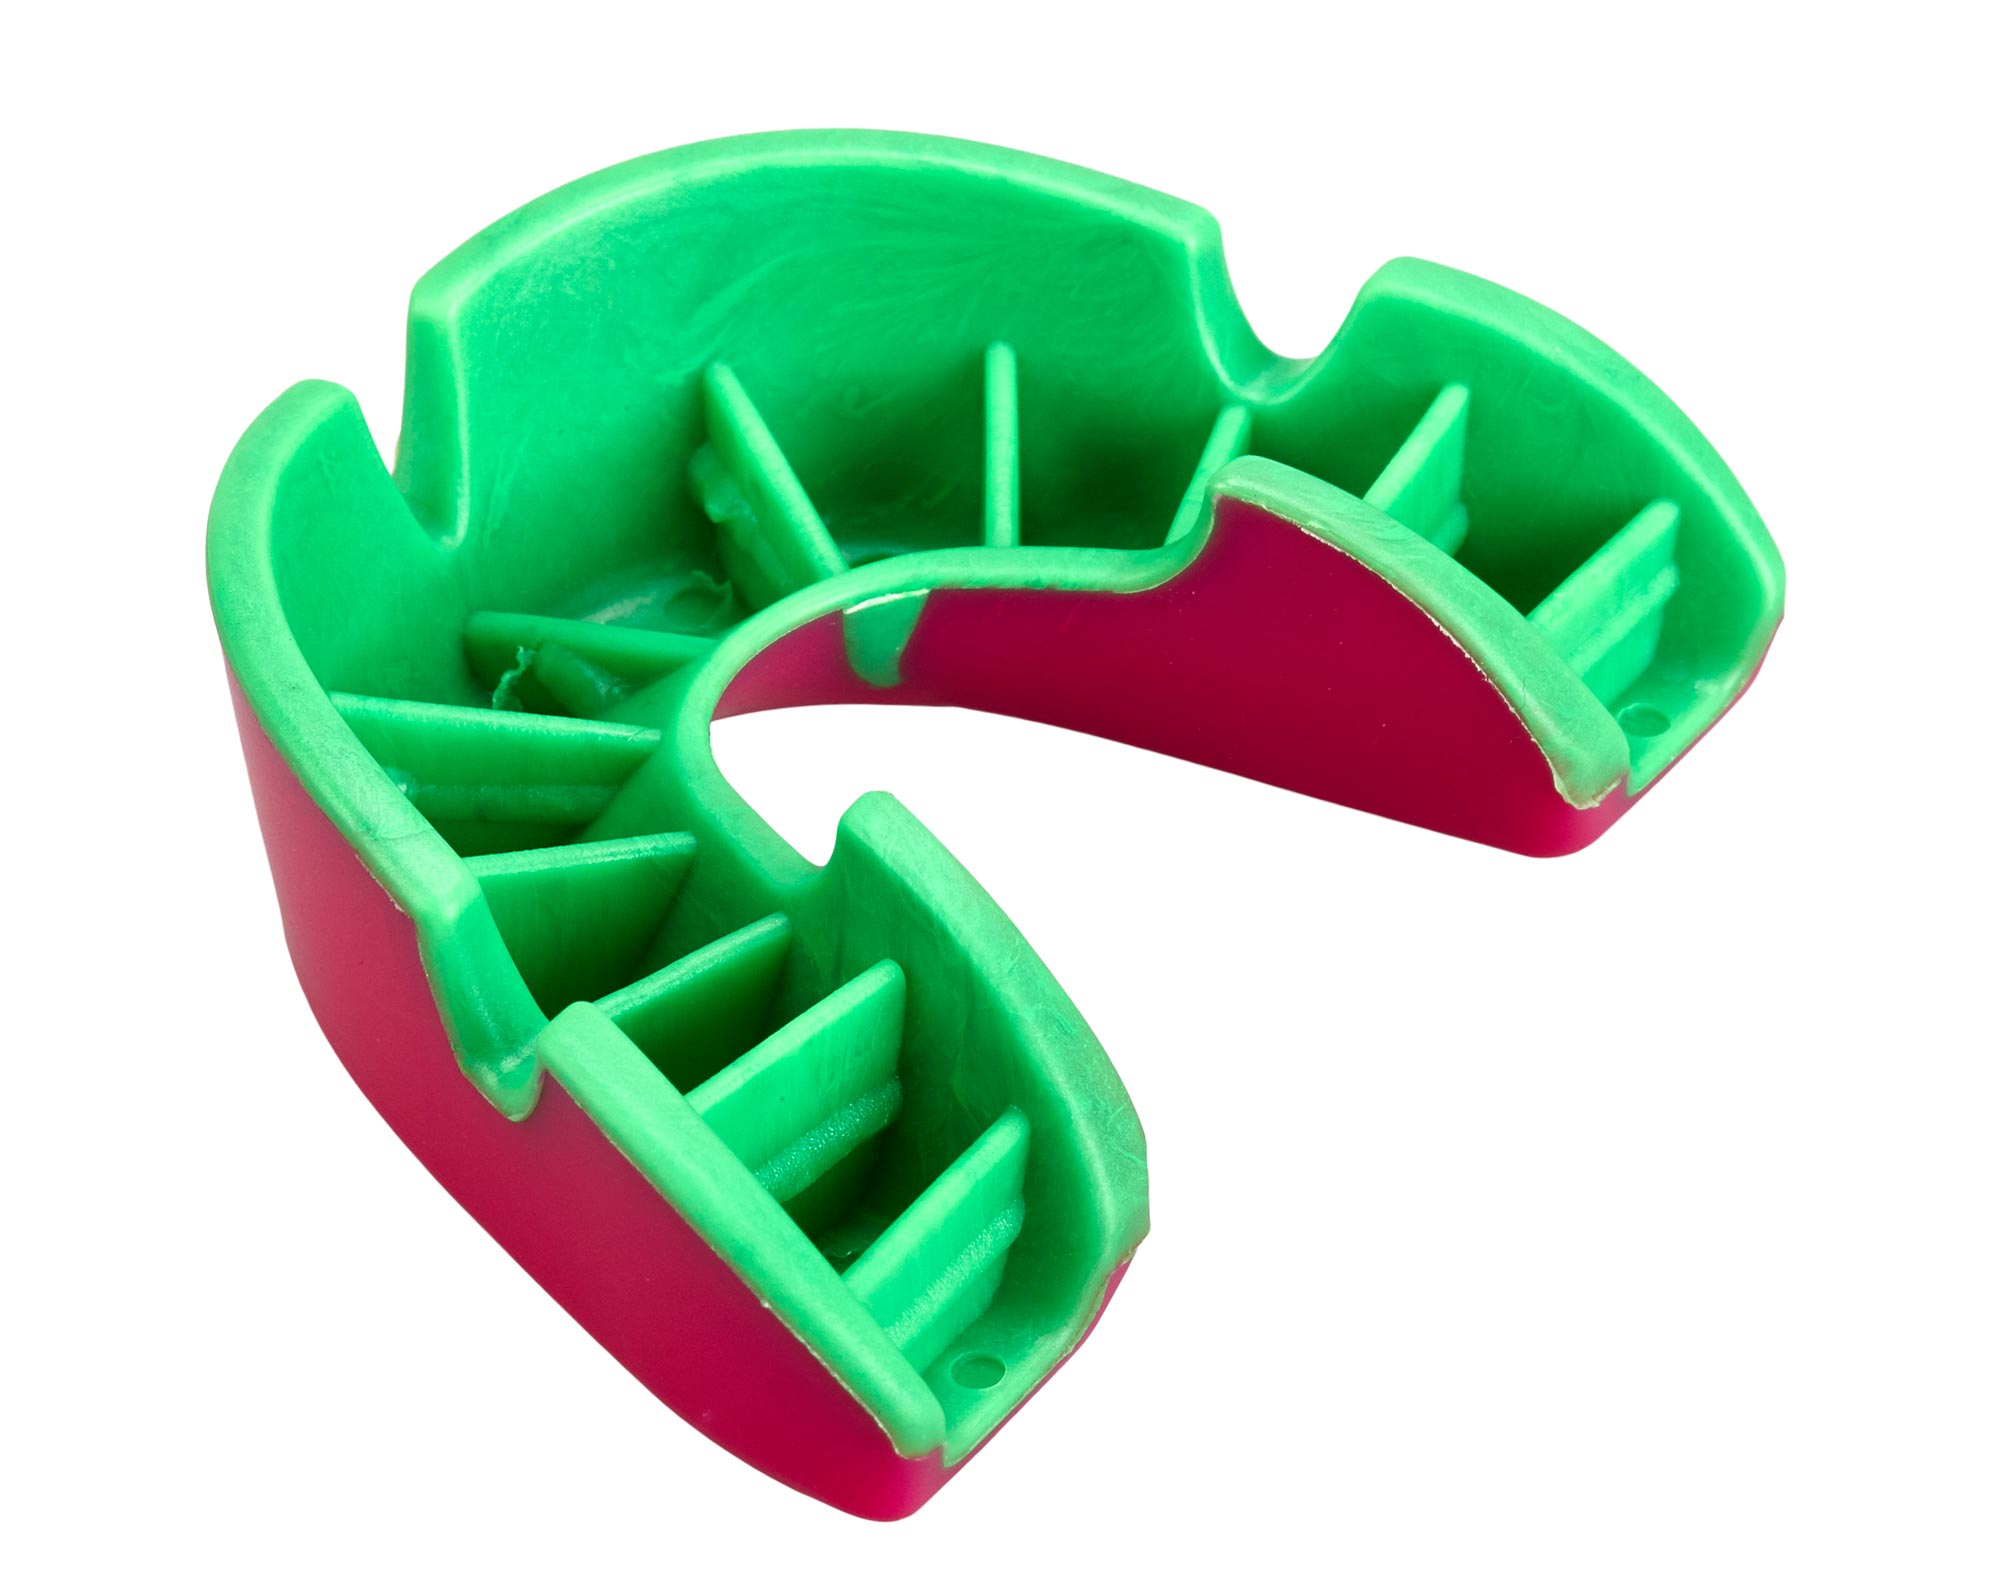 OPRO Zahnschutz Silver - Pink/ Fl. Green